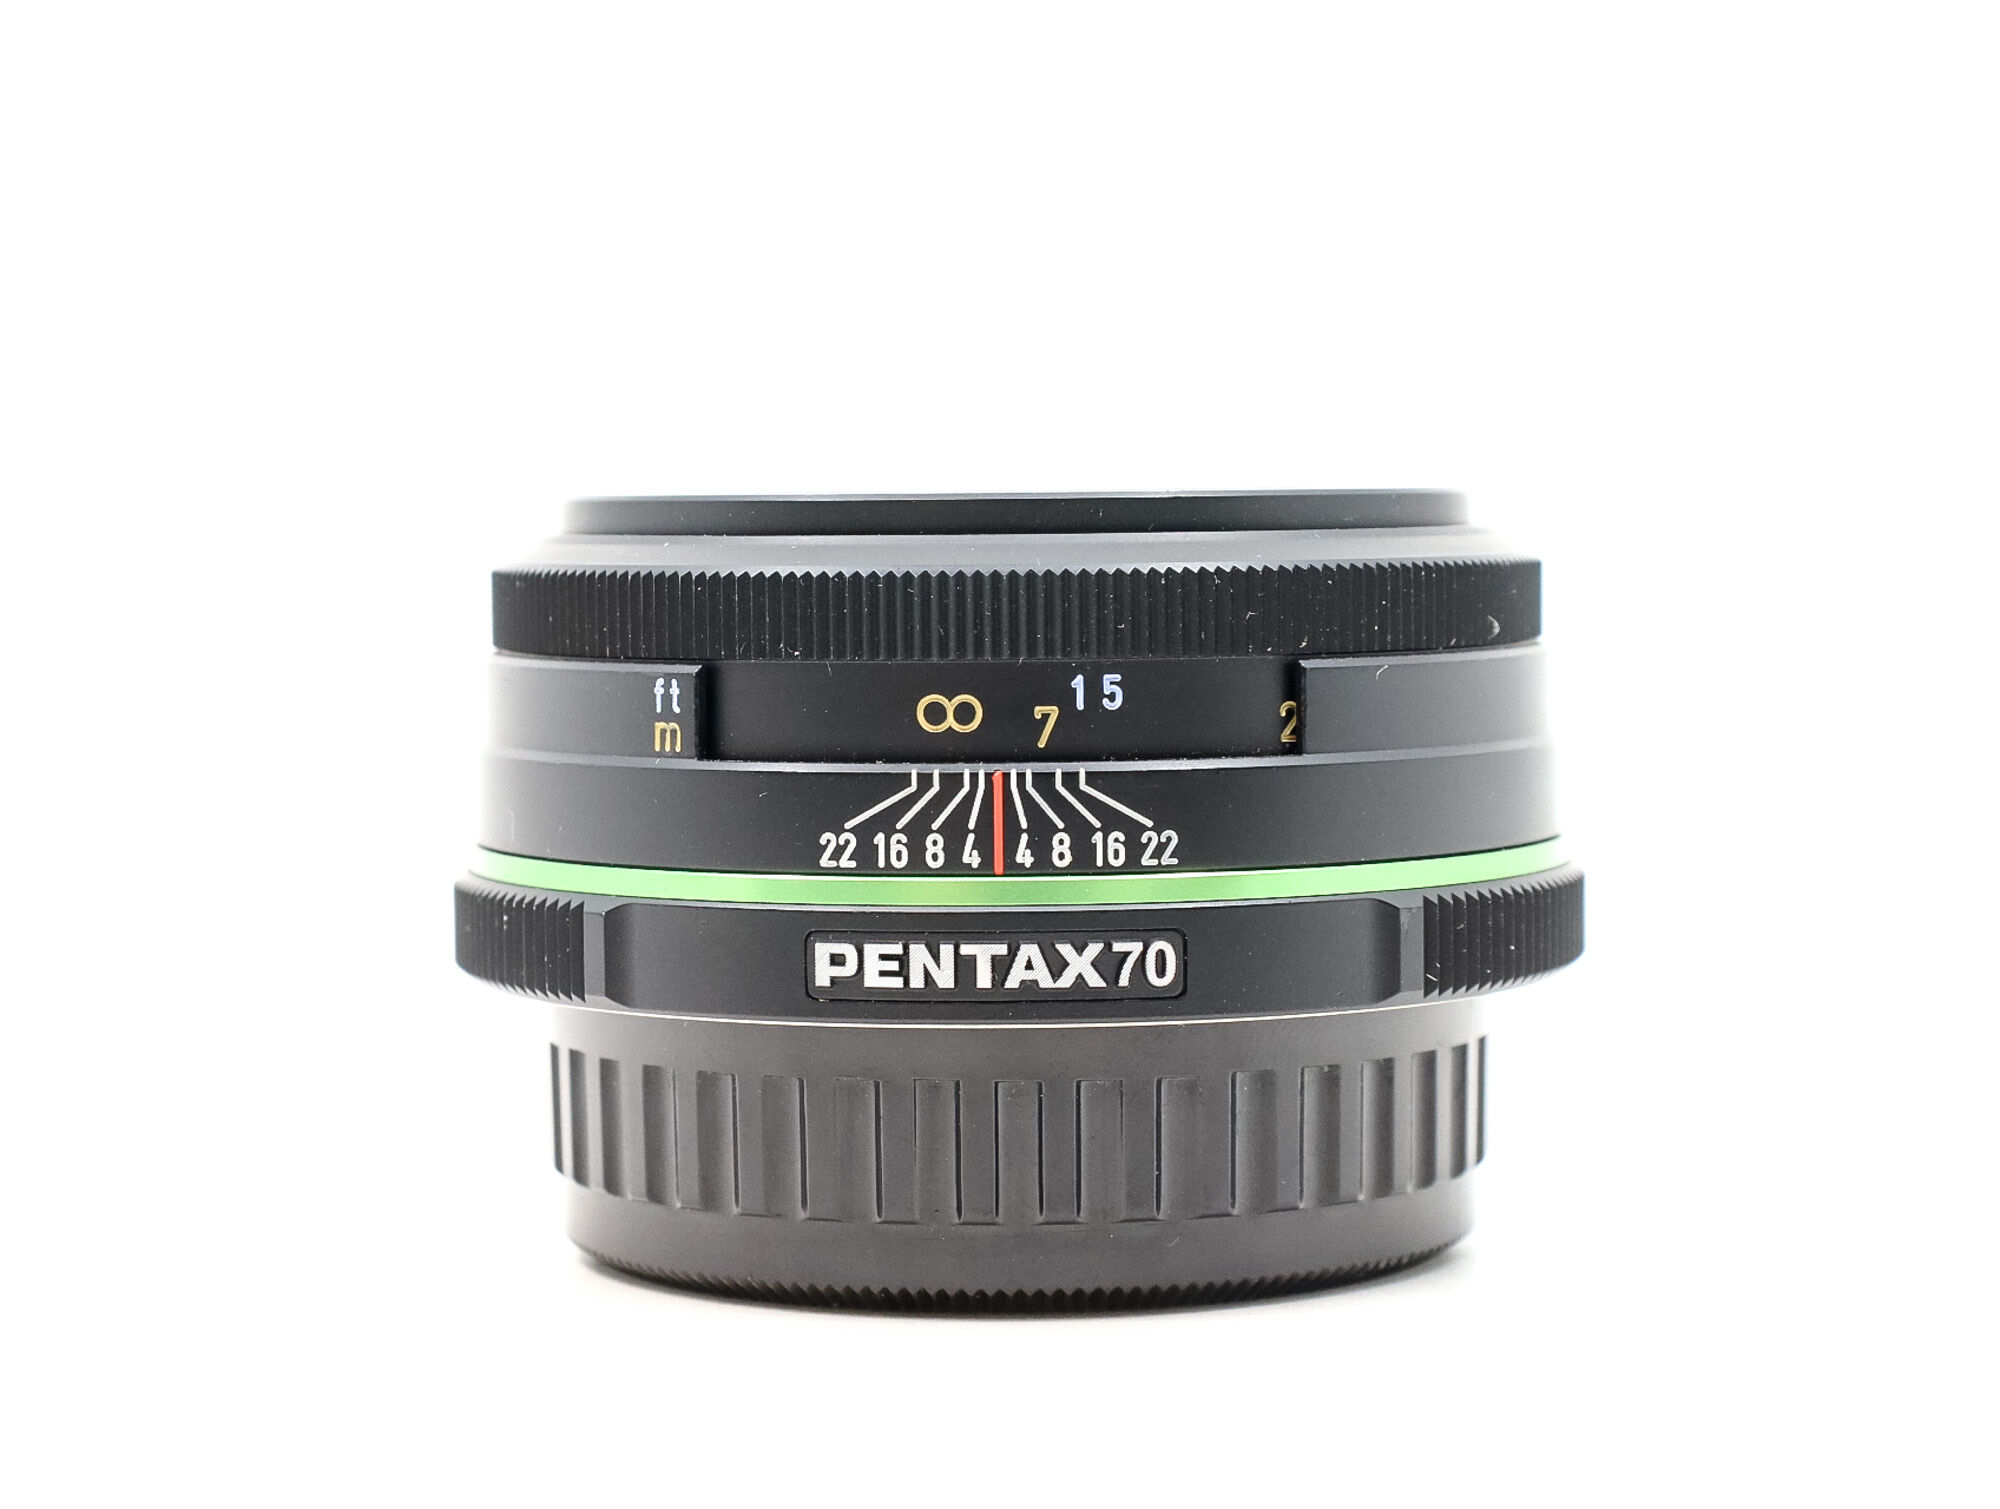 Pentax -DA 70mm f/2.4 SMC Limited (Condition: Excellent)